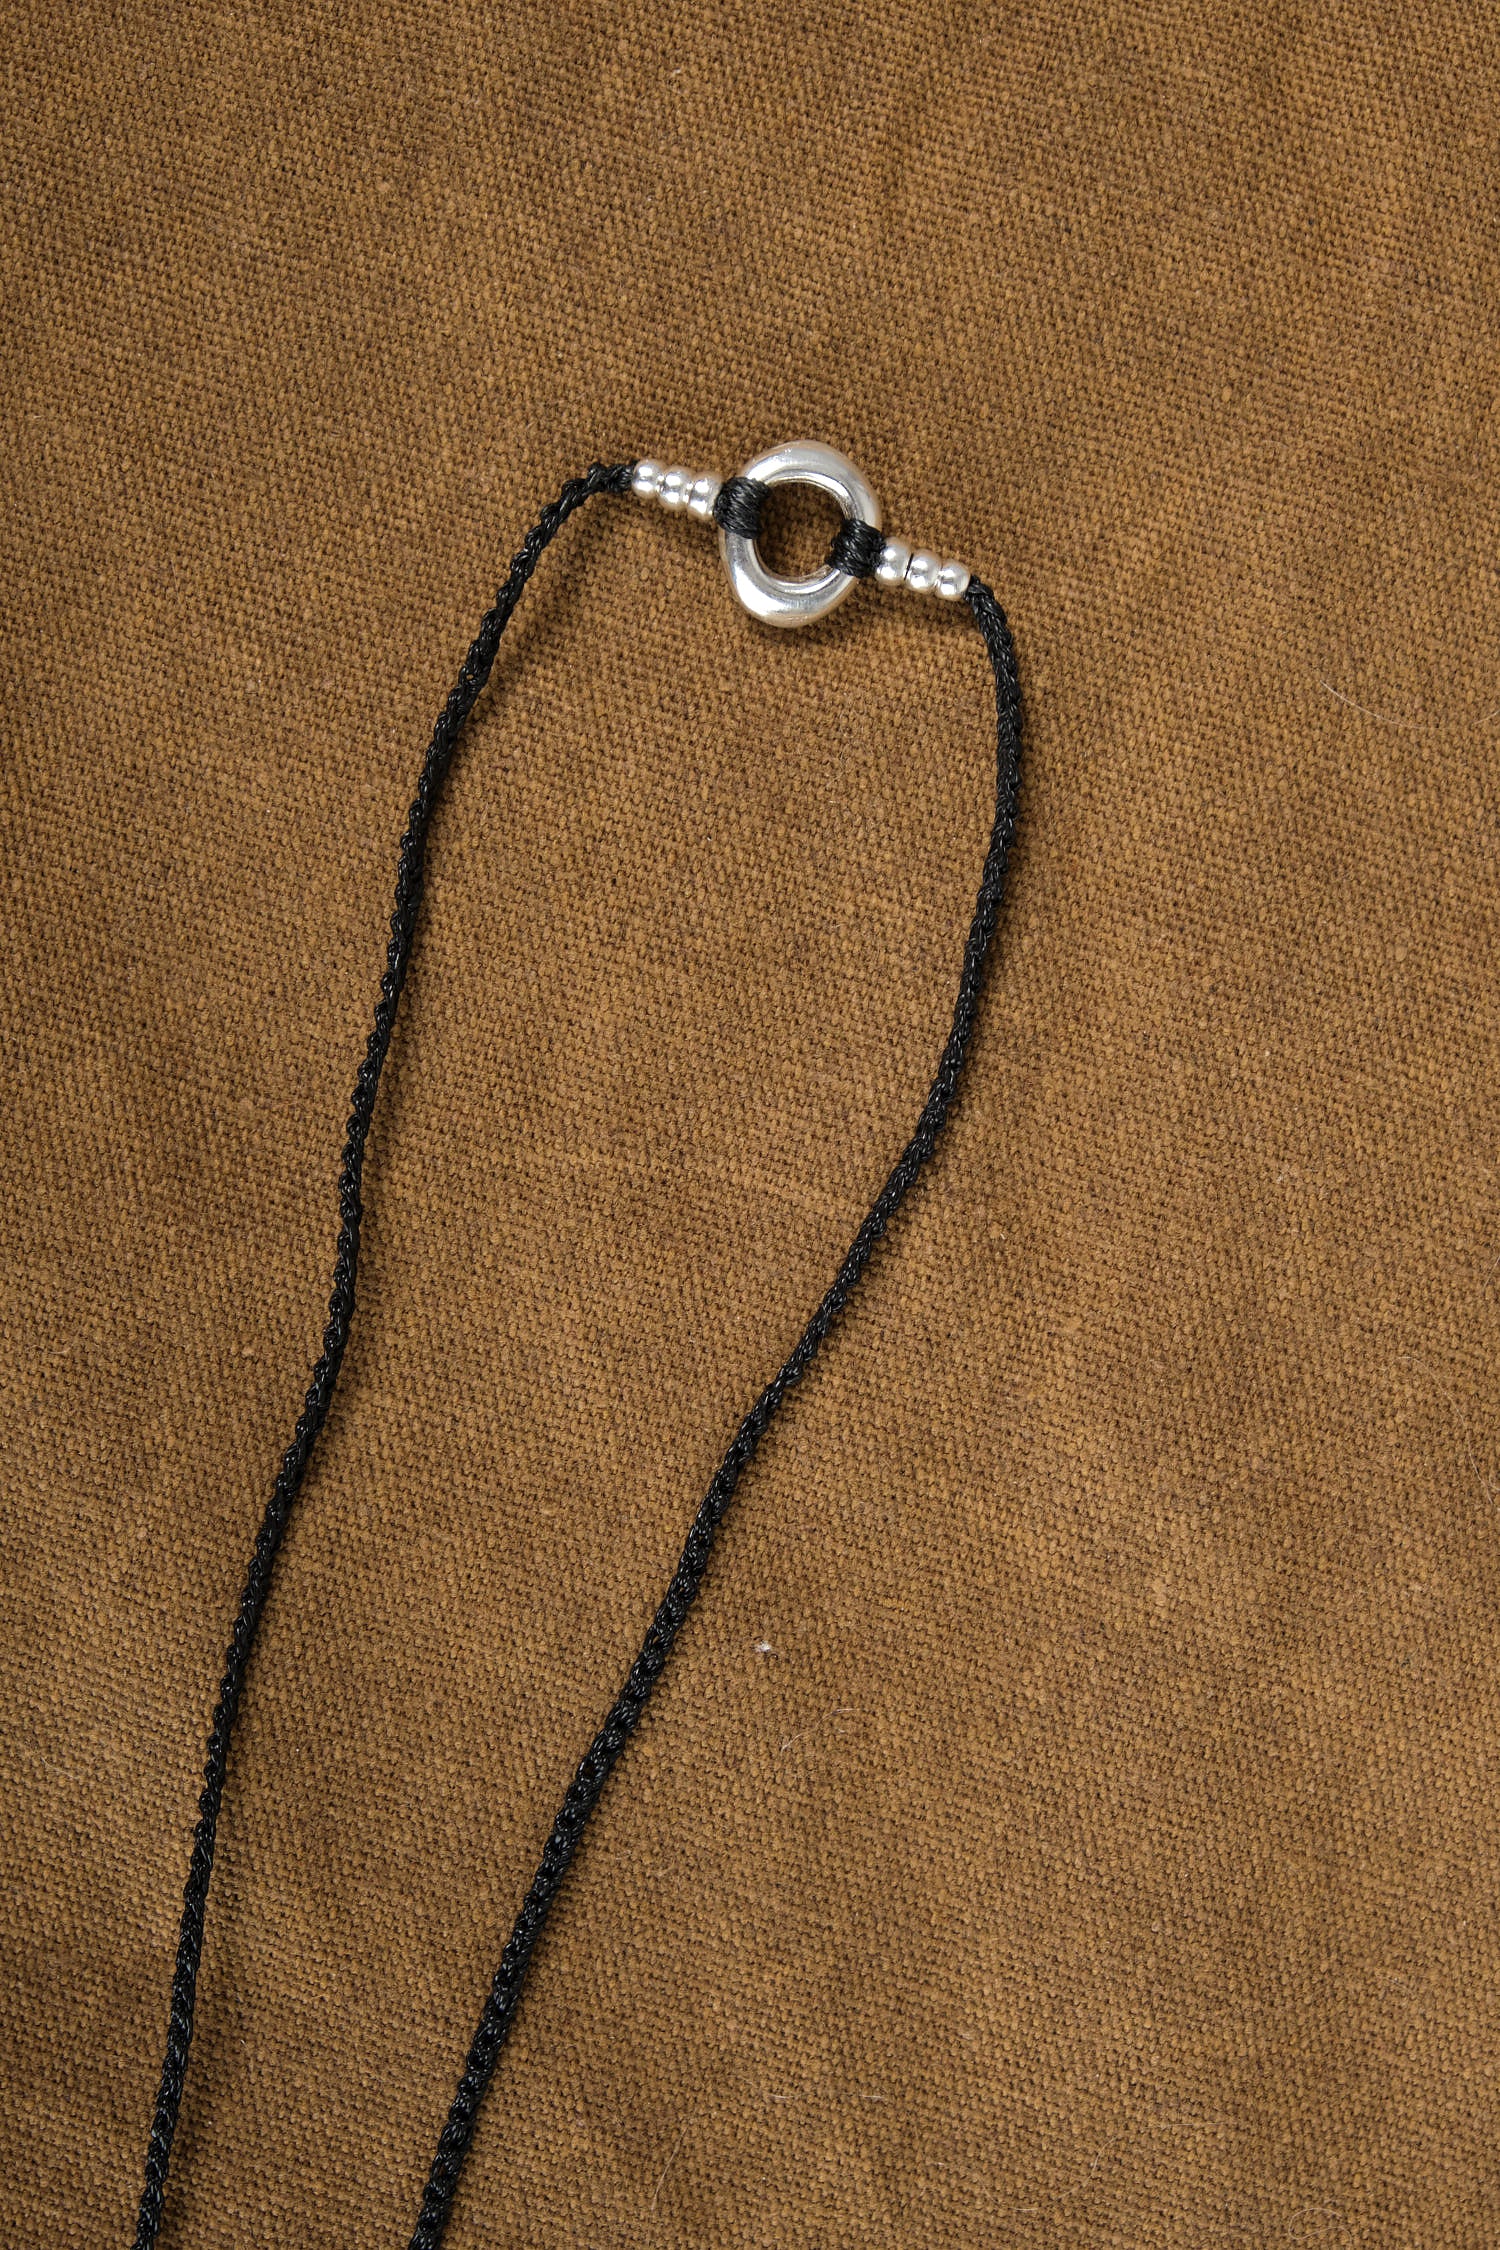 Back of Birdbone on Long Gortex Necklace